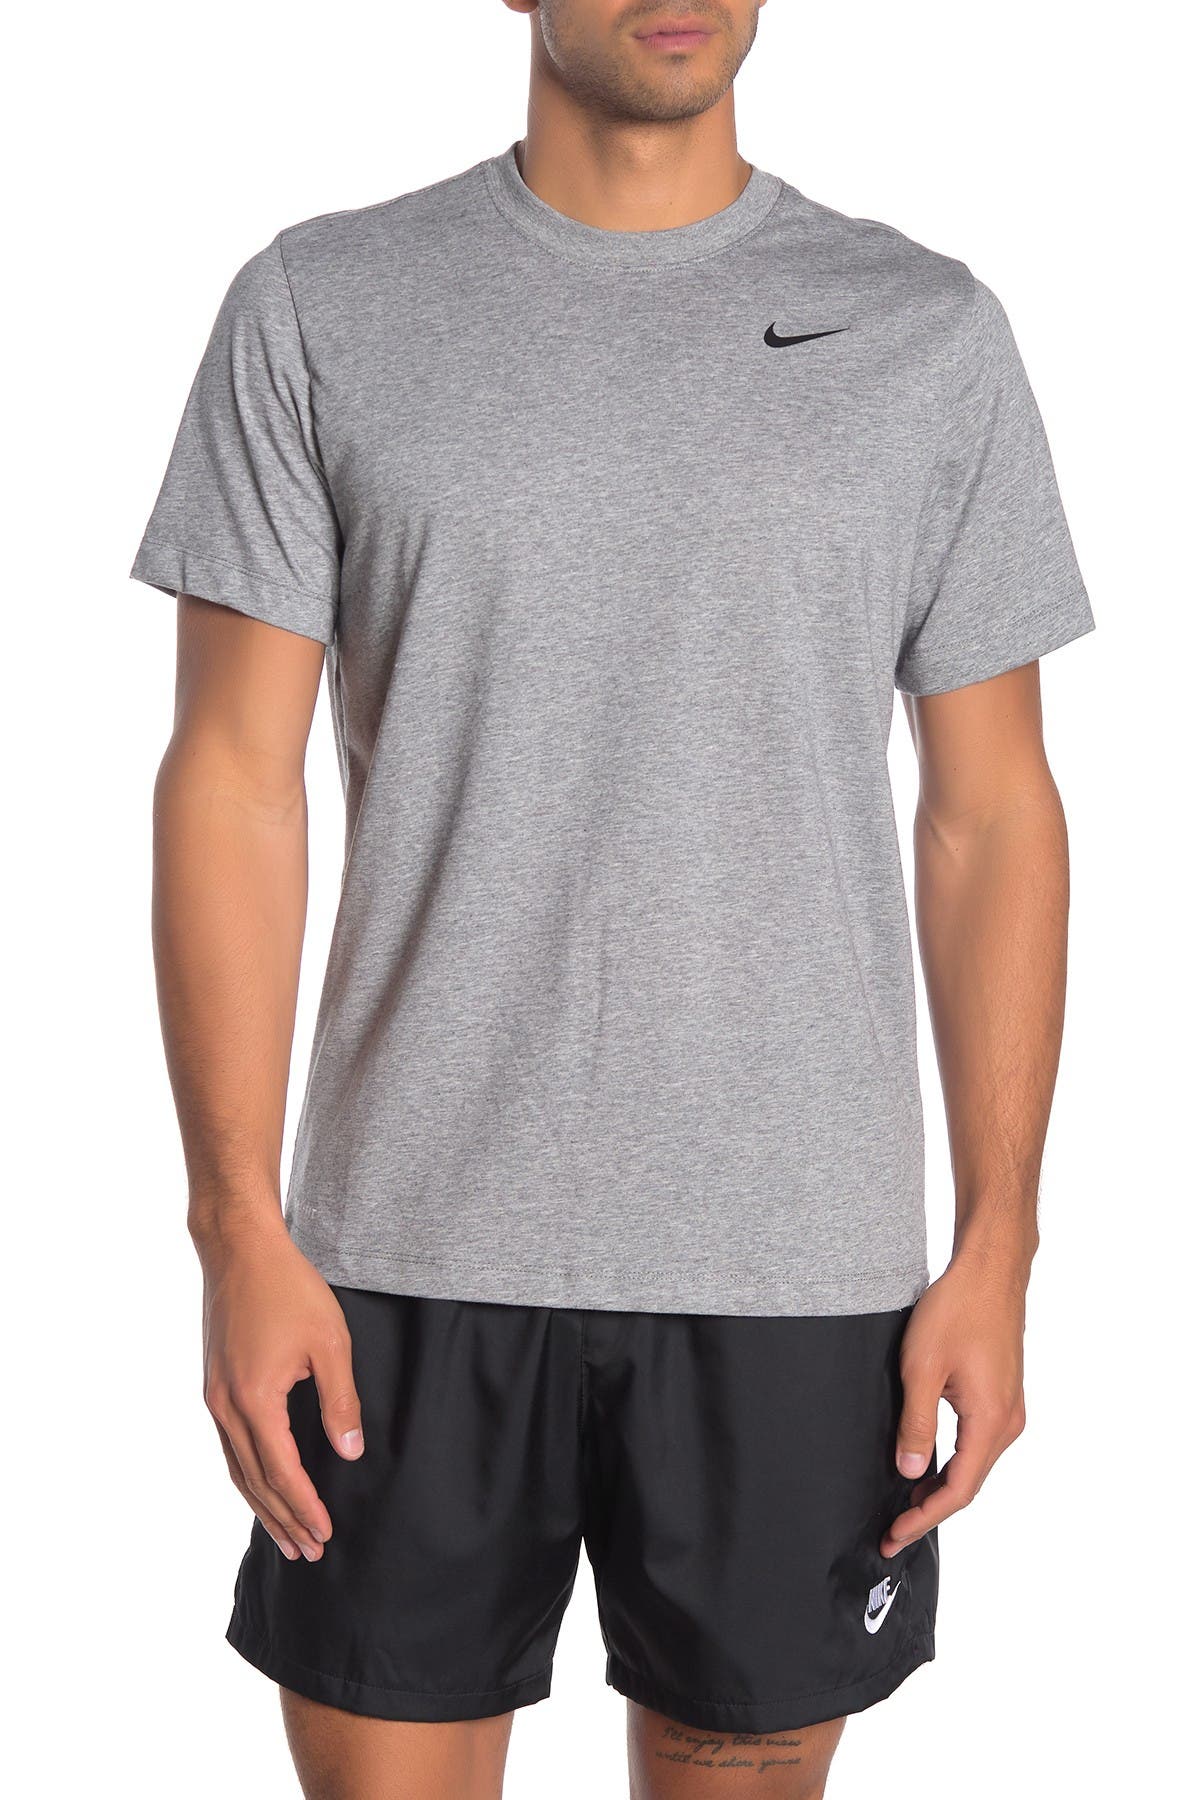 men's athletic shirts